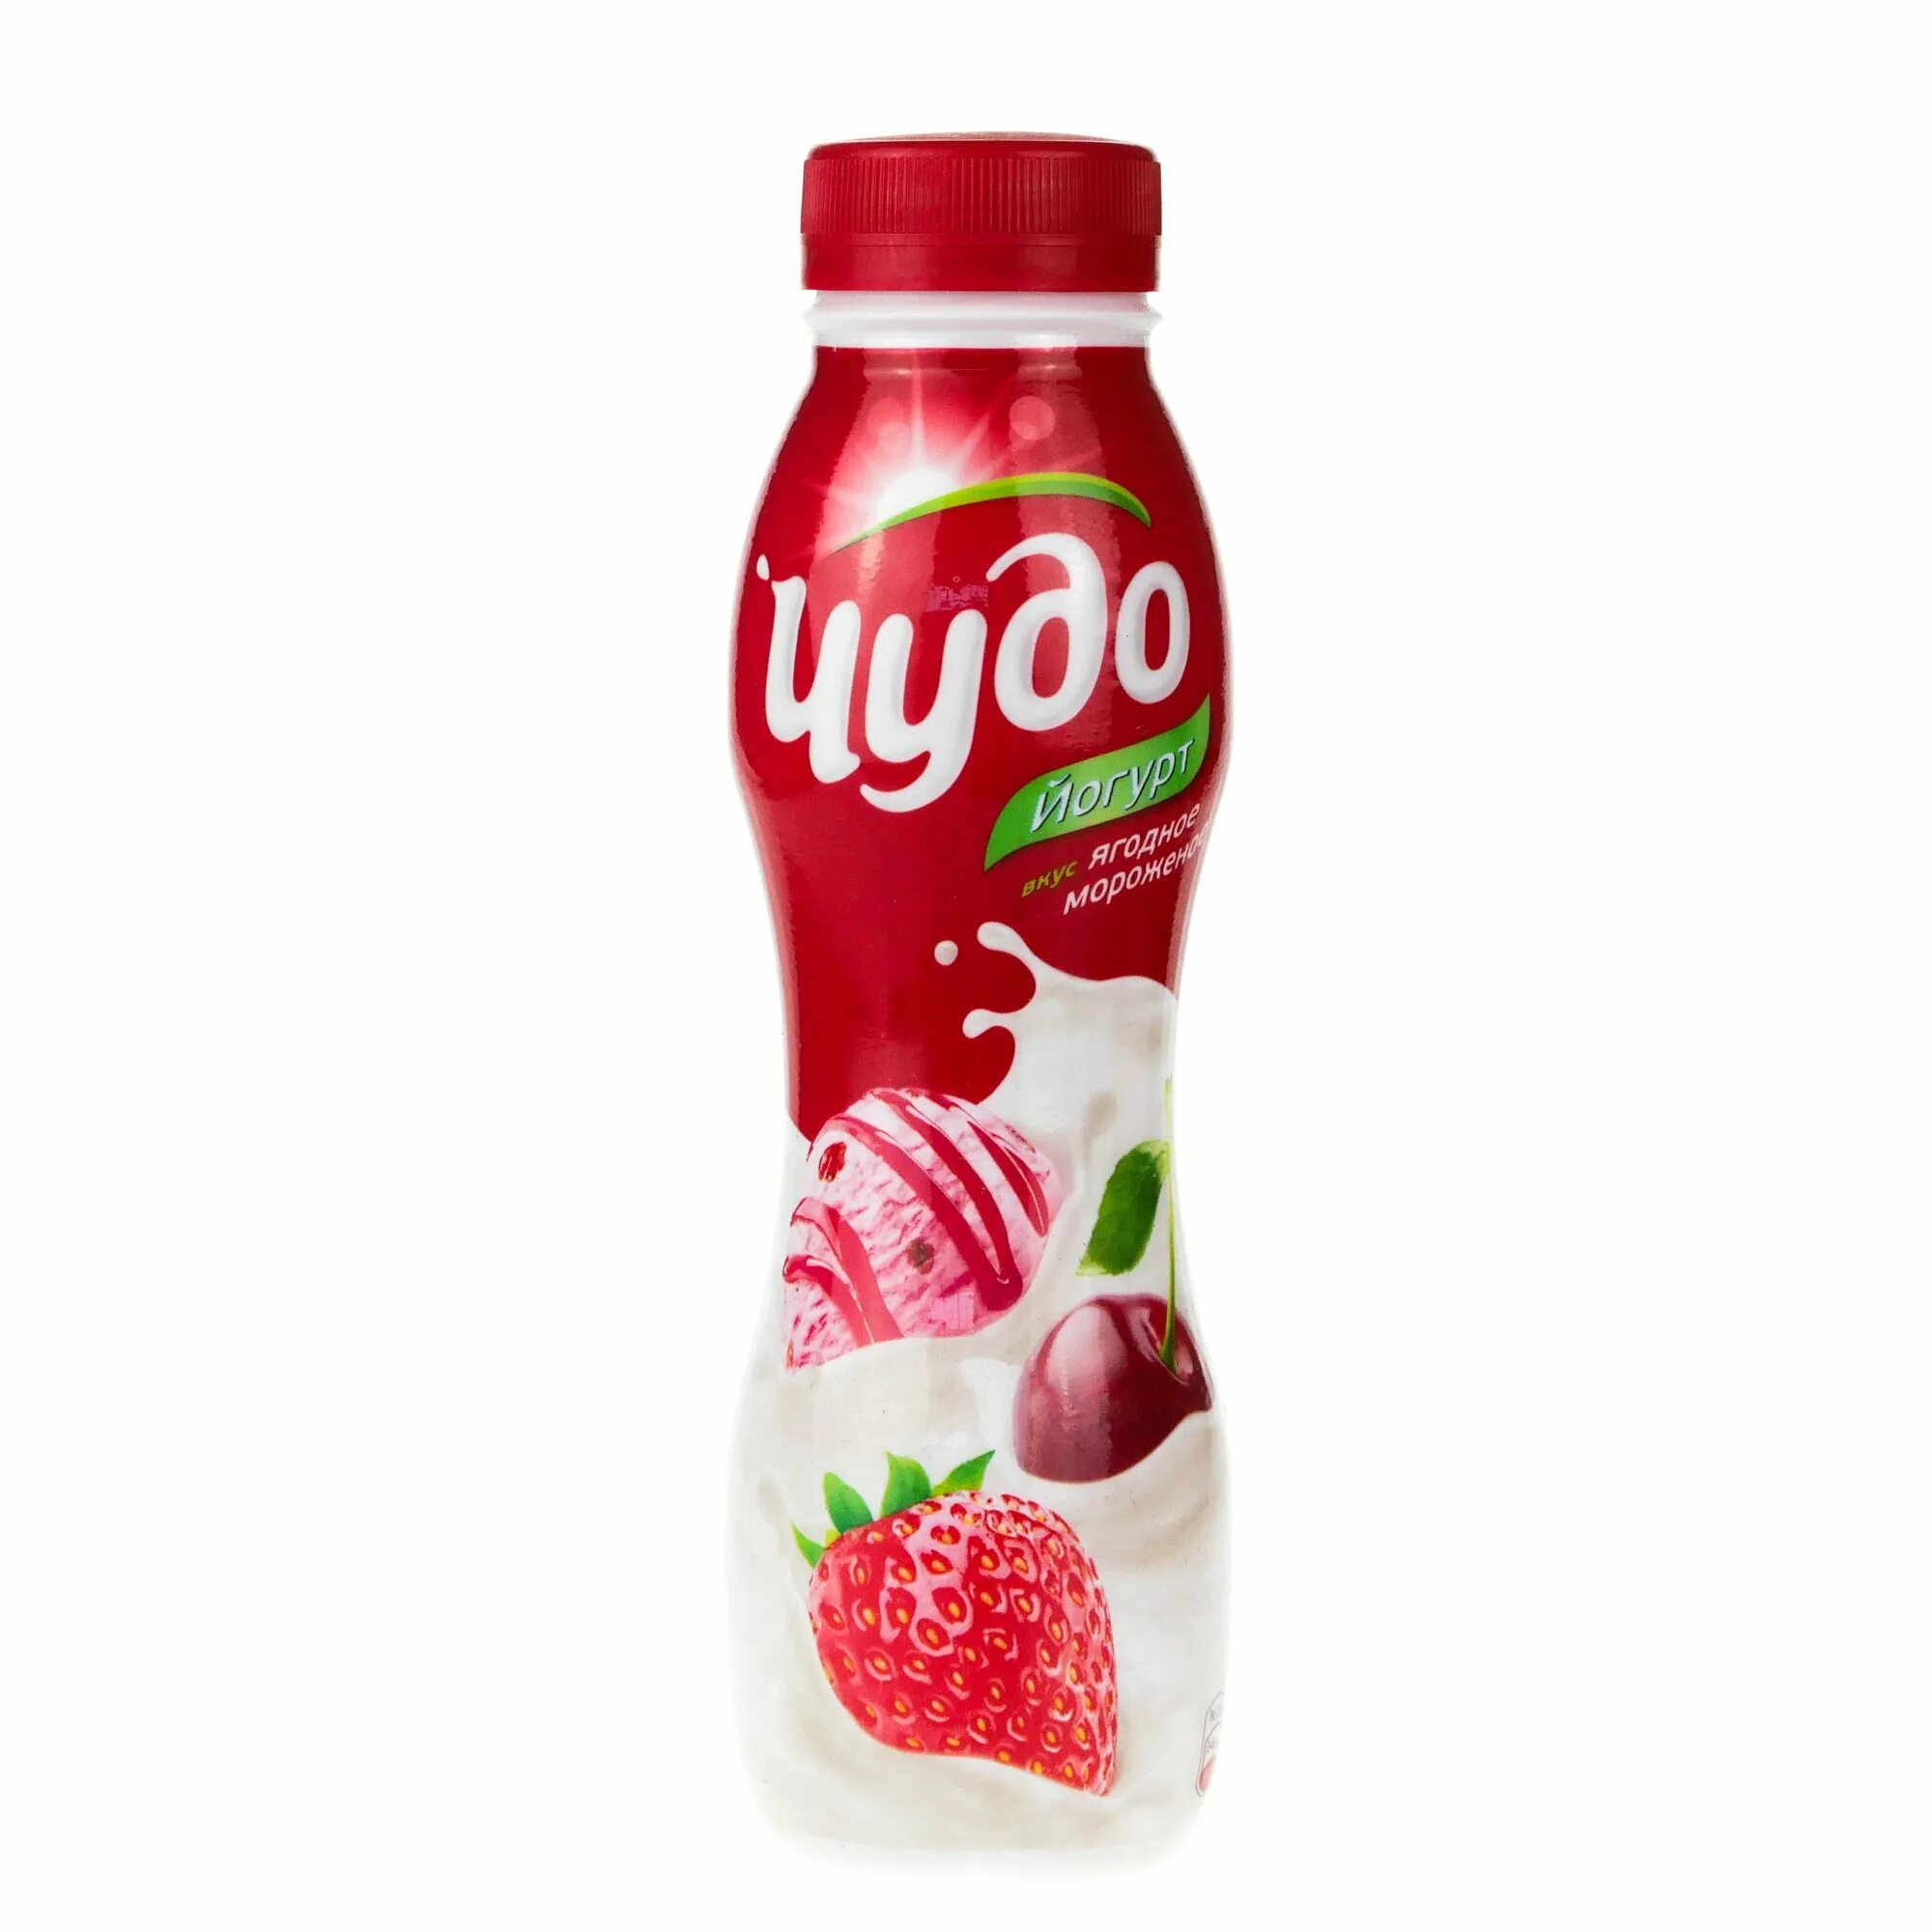 Фото питьевого йогурта. Чудо Активиа йогурт клубника. Чудо йогурт питьевой. Чудо йогурт земляника. Чудо йогурт питьевой Ягодное мороженое.